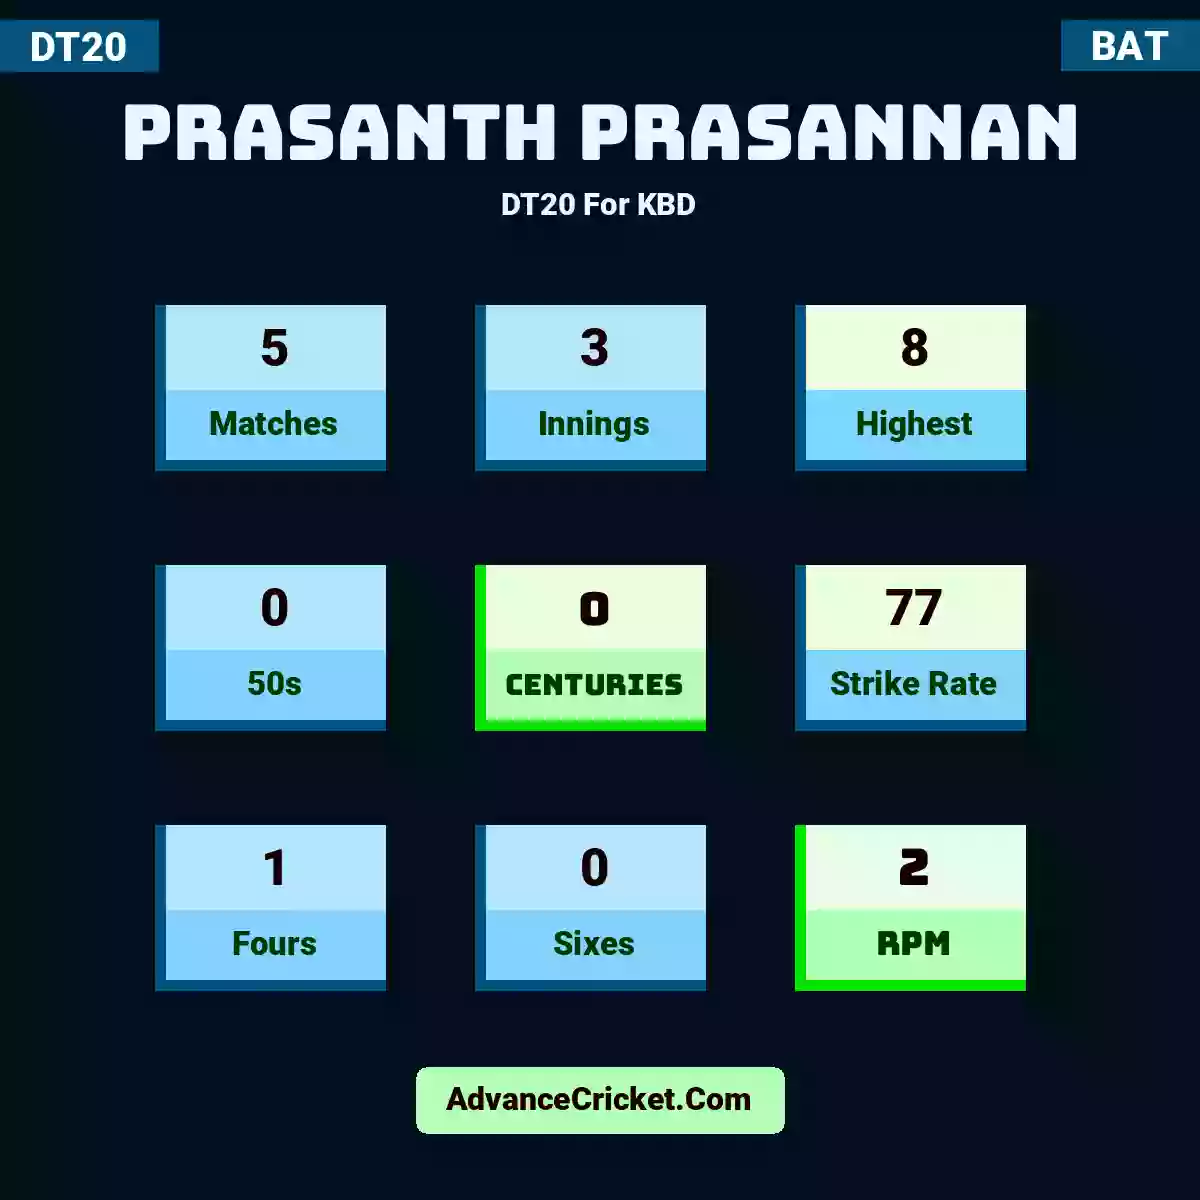 Prasanth Prasannan DT20  For KBD, Prasanth Prasannan played 5 matches, scored 8 runs as highest, 0 half-centuries, and 0 centuries, with a strike rate of 77. P.Prasannan hit 1 fours and 0 sixes, with an RPM of 2.